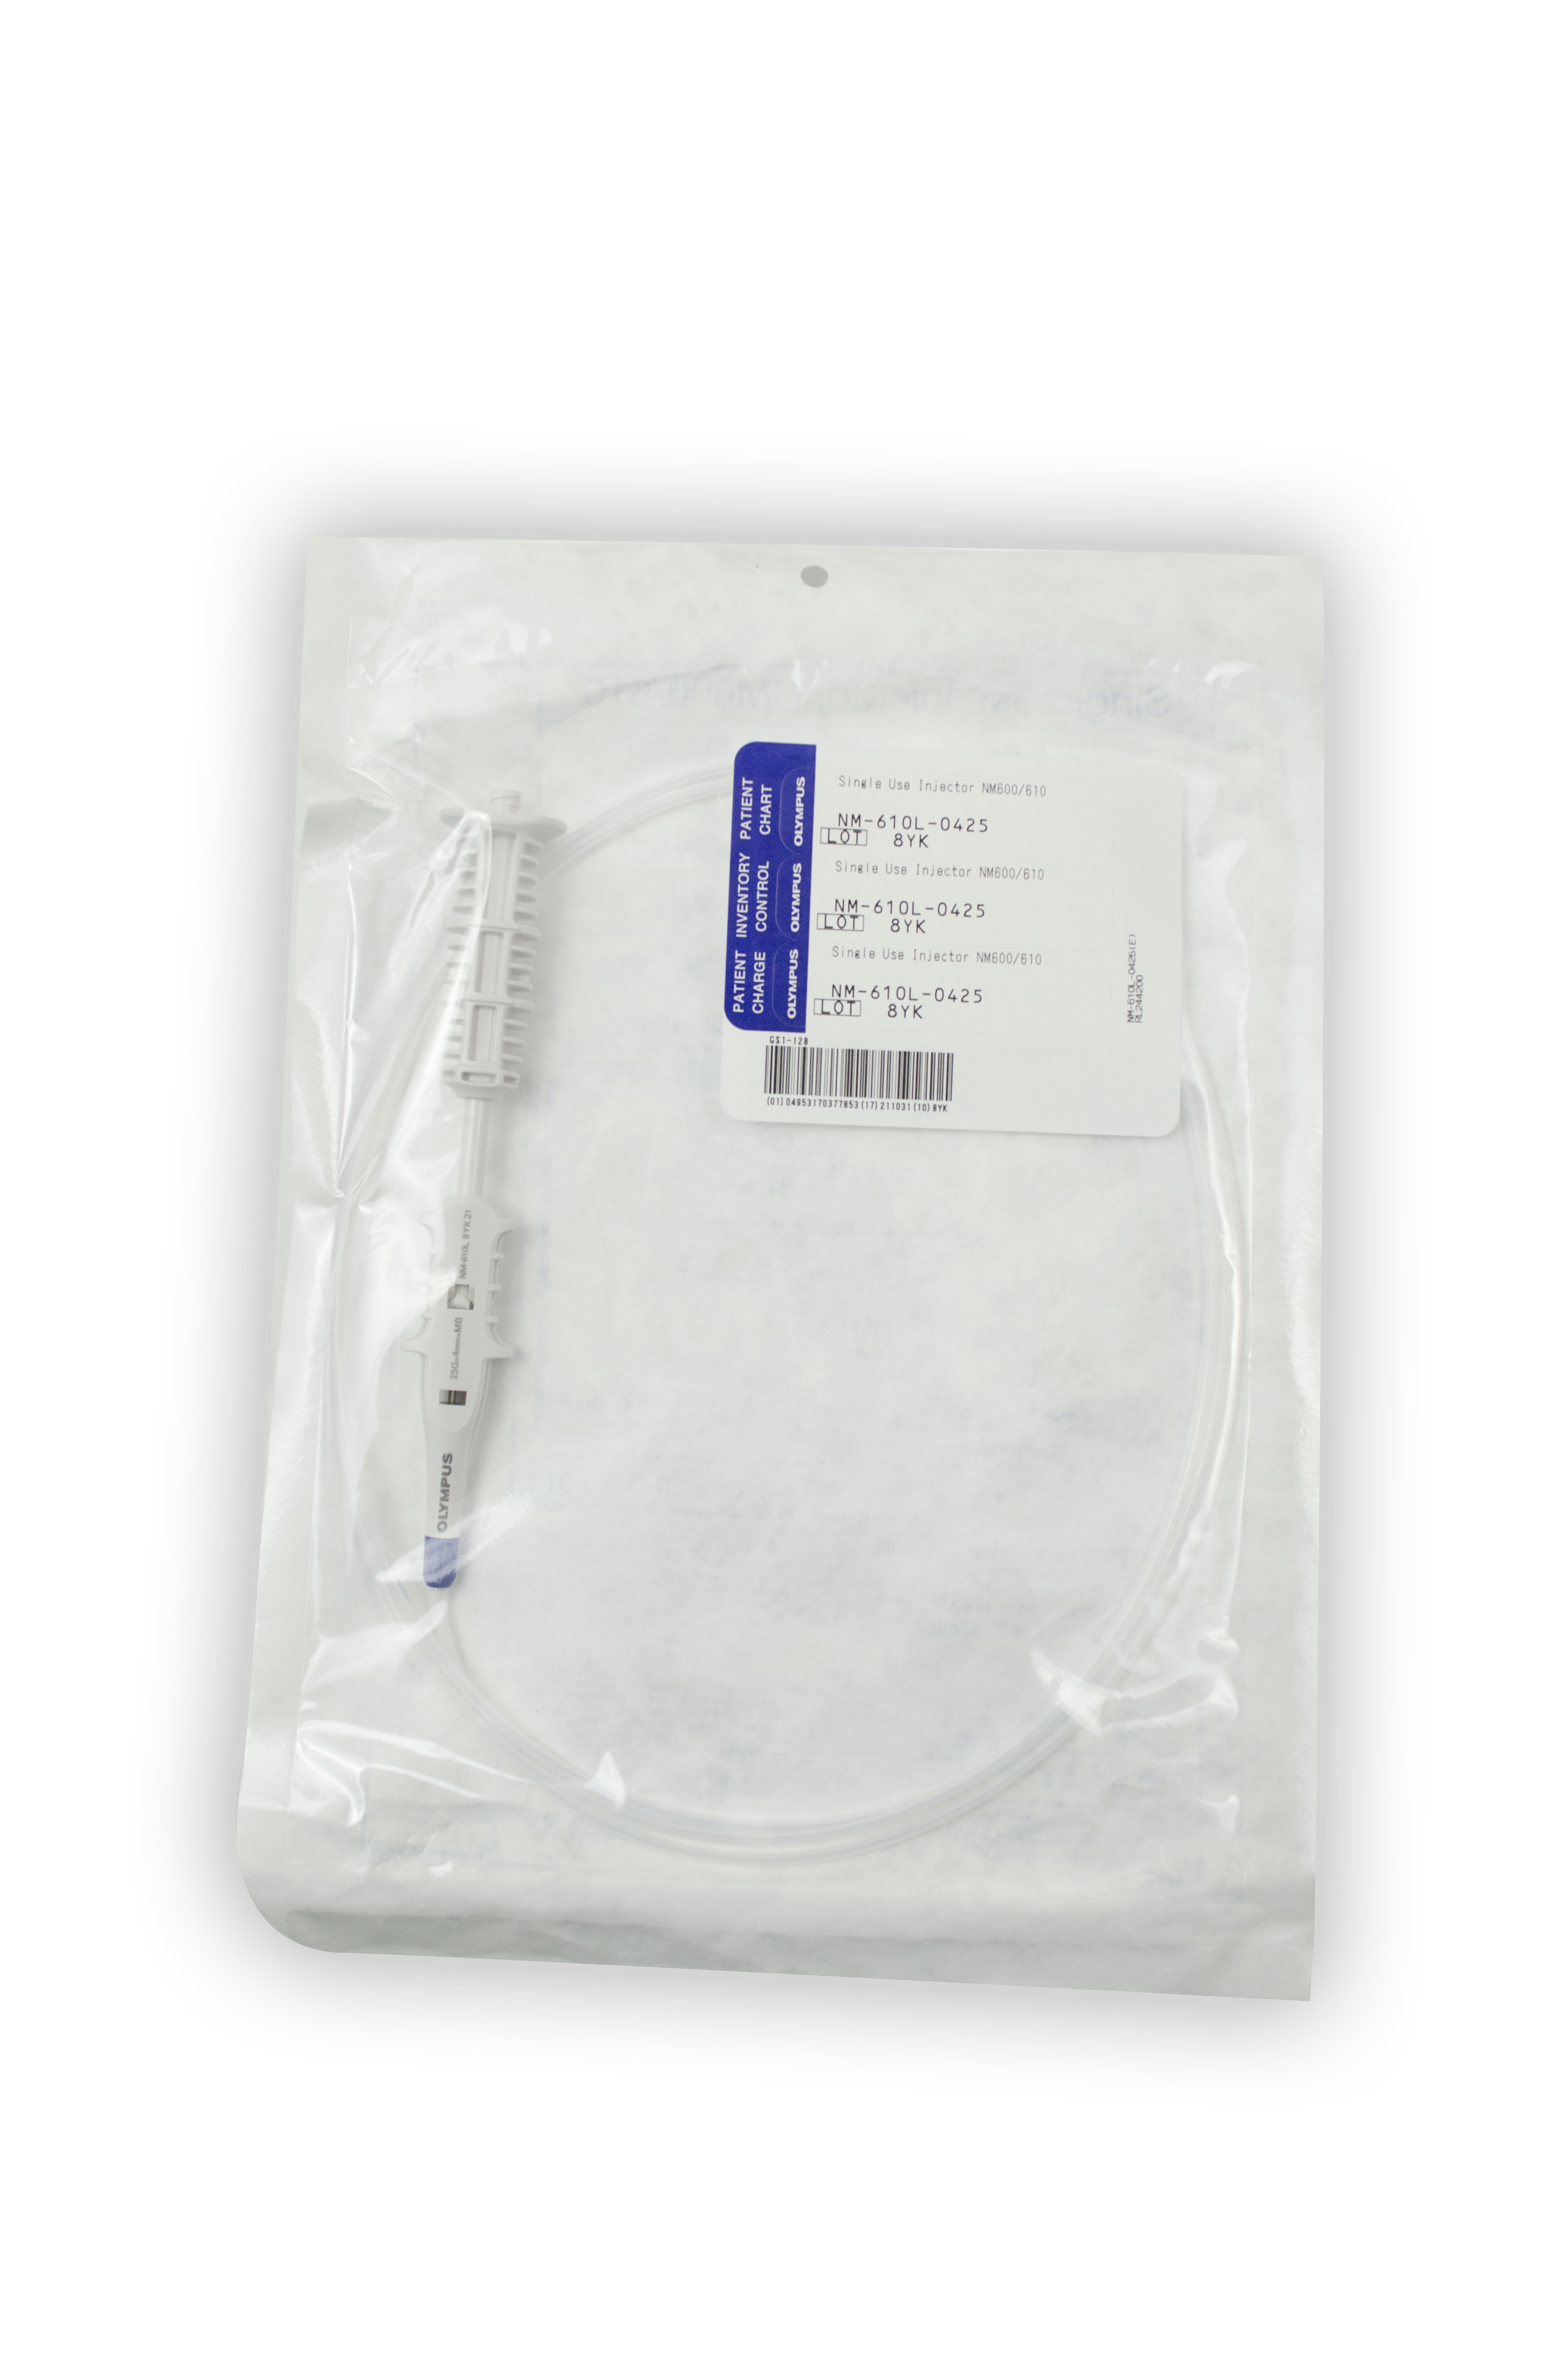 [In-Date] Olympus Disposable Injector (2.6 mm) - NM-610L-0425 (Original Packaging)